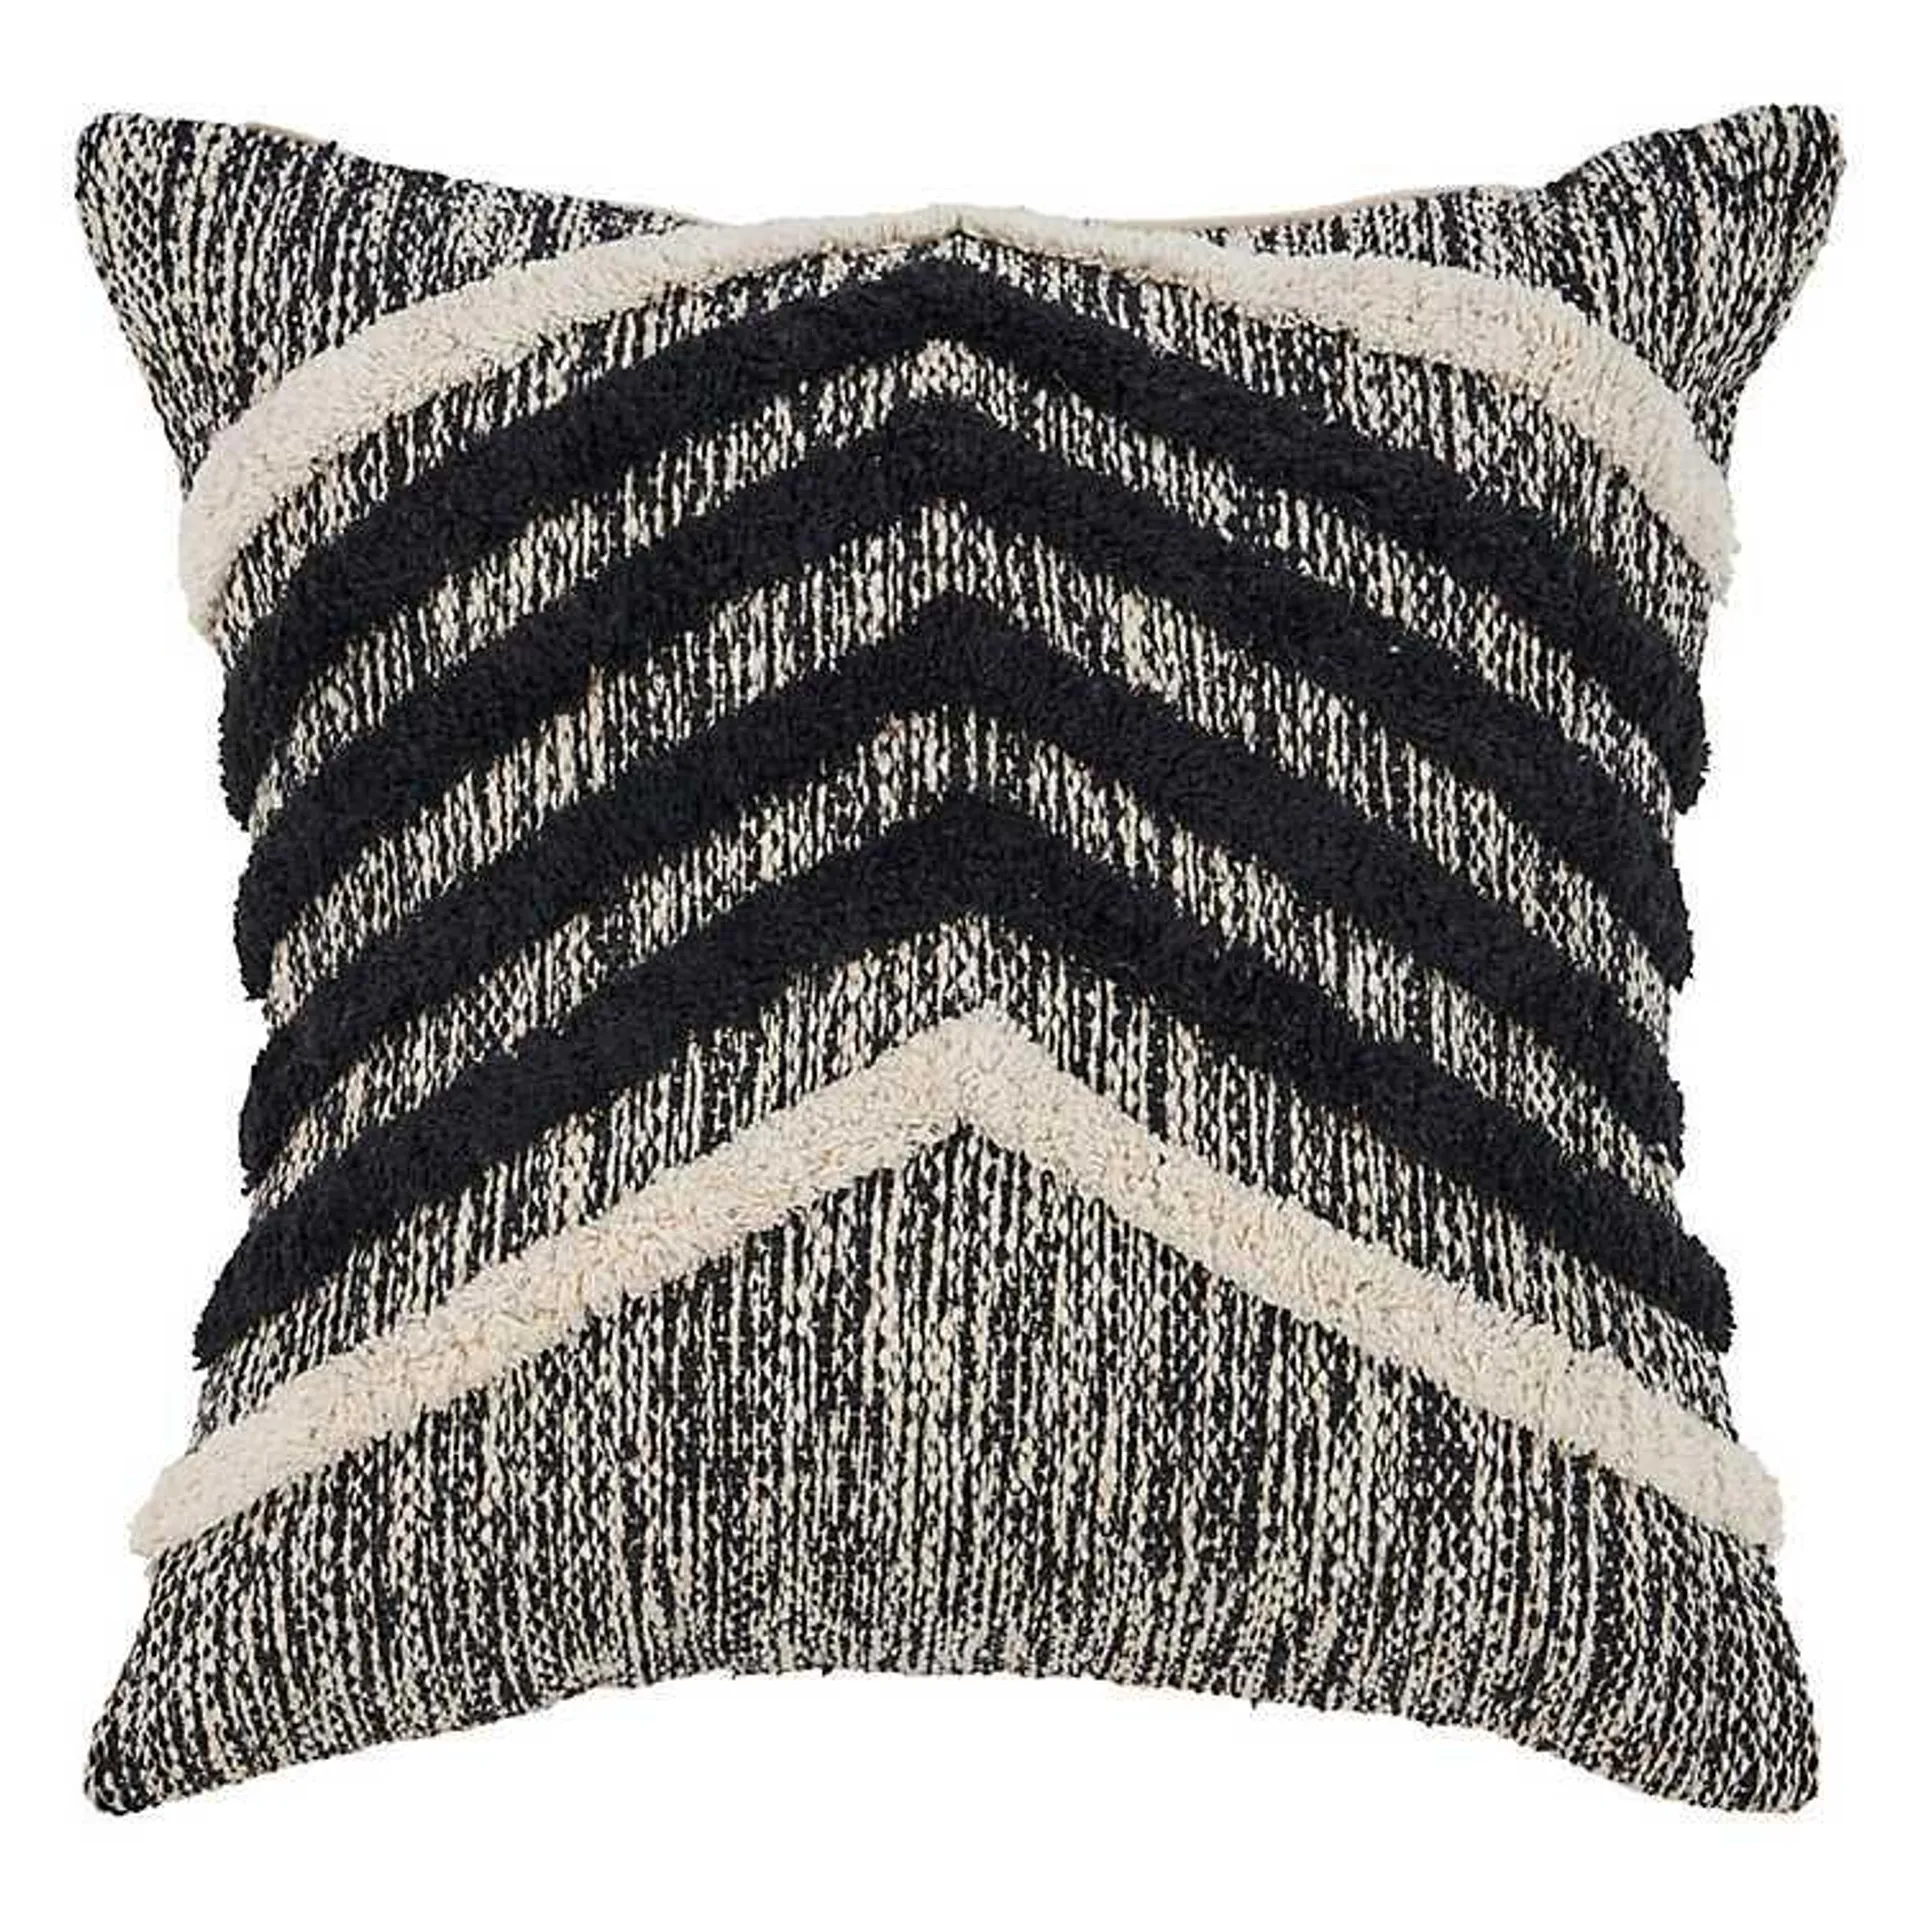 Black and Metallic Fringe Textured Pillow